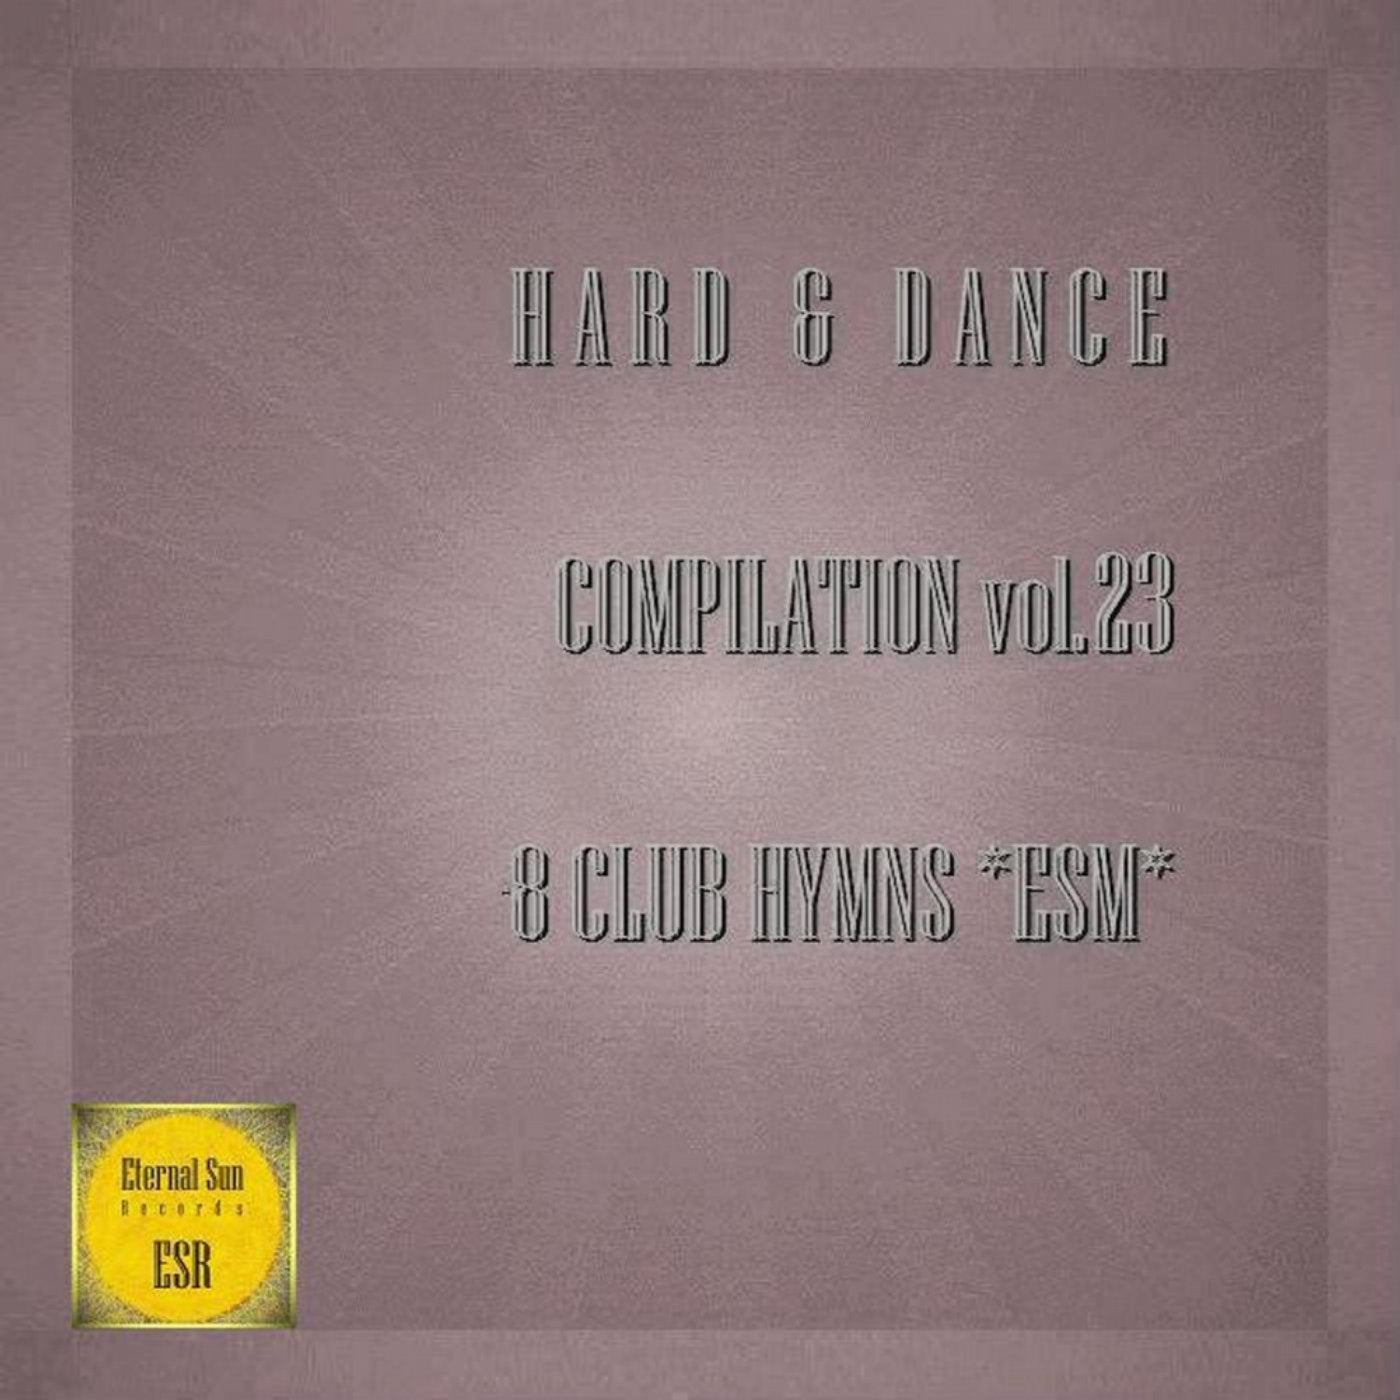 Hard & Dance Compilation, Vol. 23 - 8 Club Hymns ESM